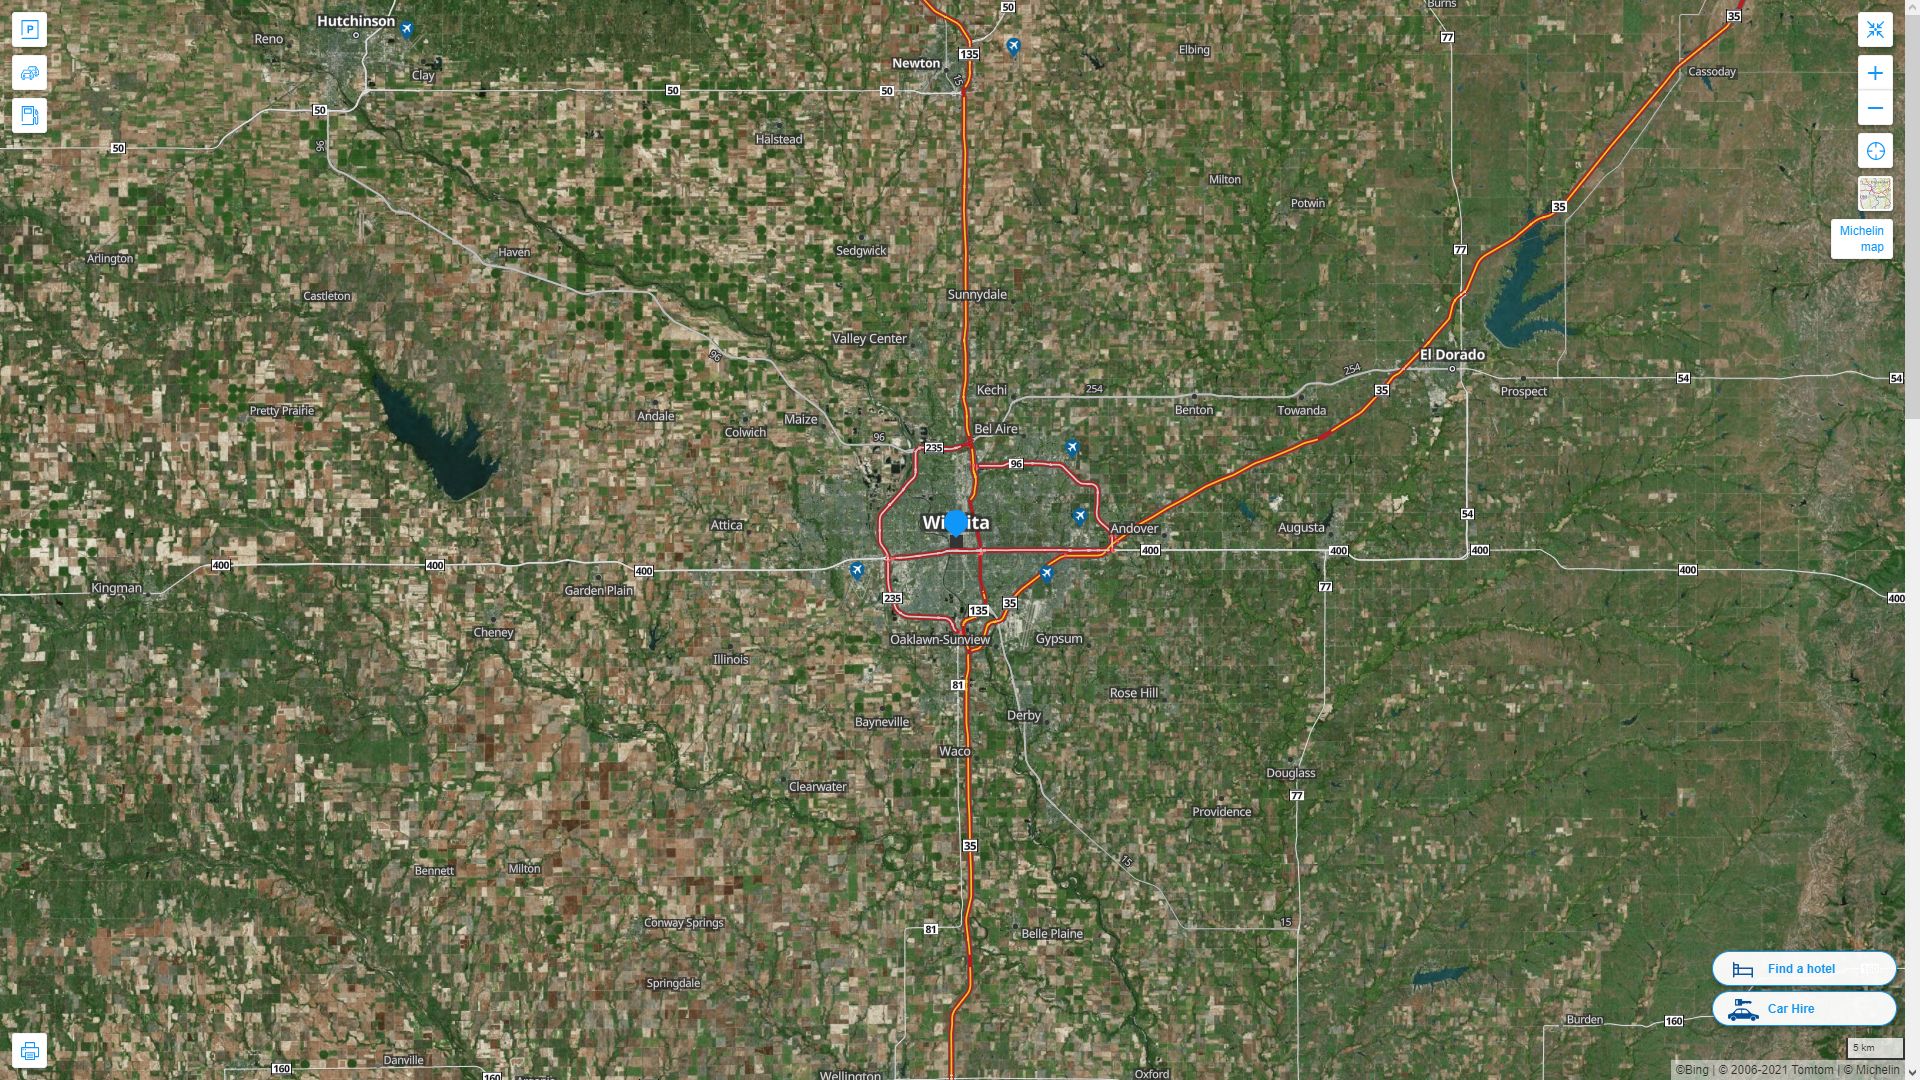 Wichita Kansas Highway and Road Map with Satellite View